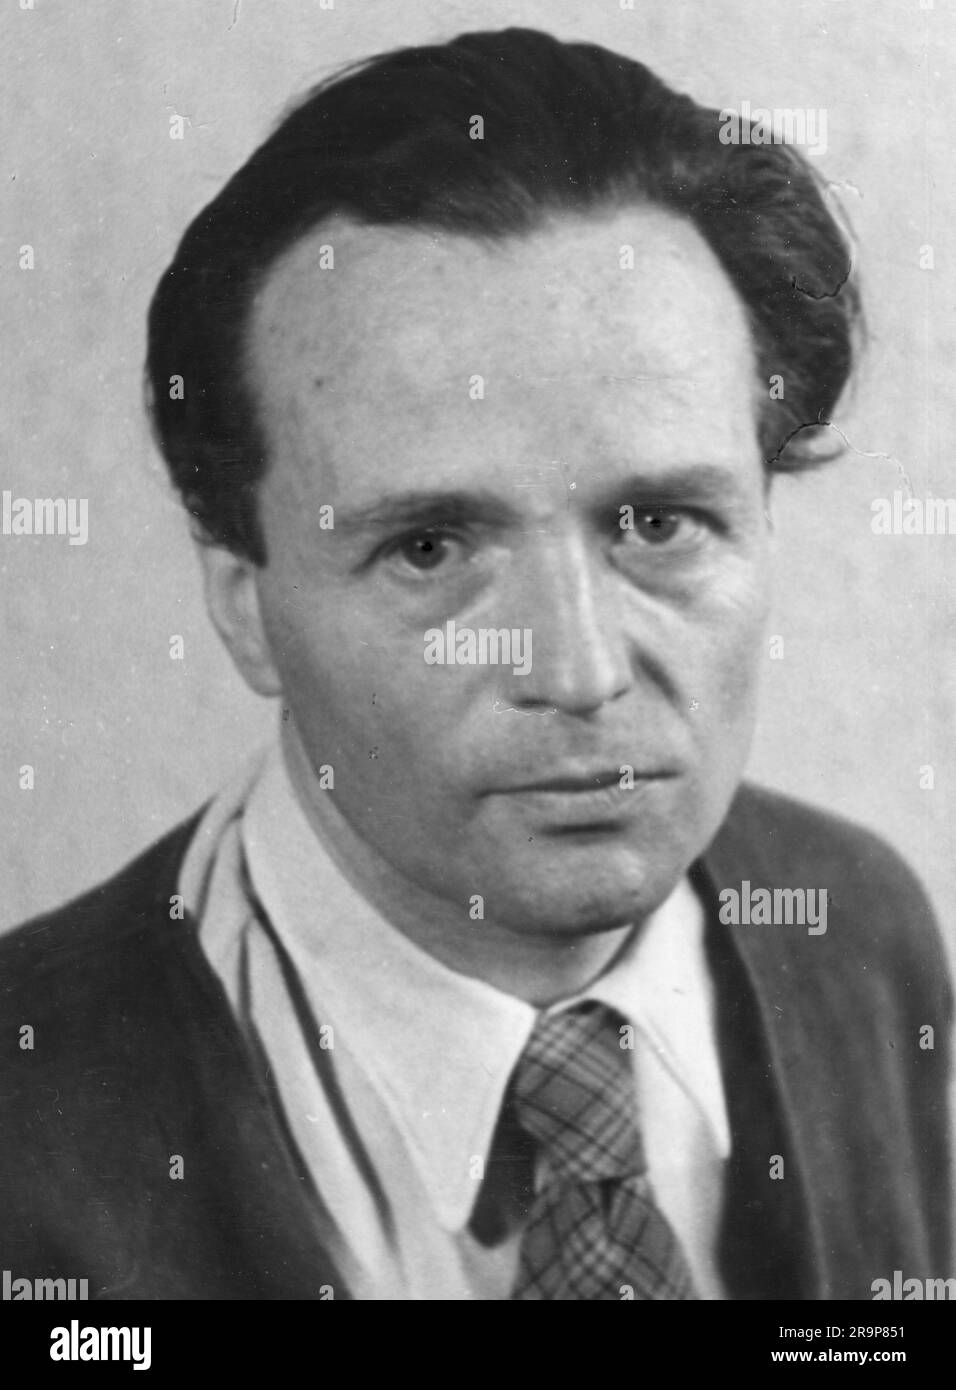 Weyrauch, Wolfgang, 15.10.1904 - 7.11.1980, écrivain allemand, 1930s, À USAGE ÉDITORIAL EXCLUSIF Banque D'Images